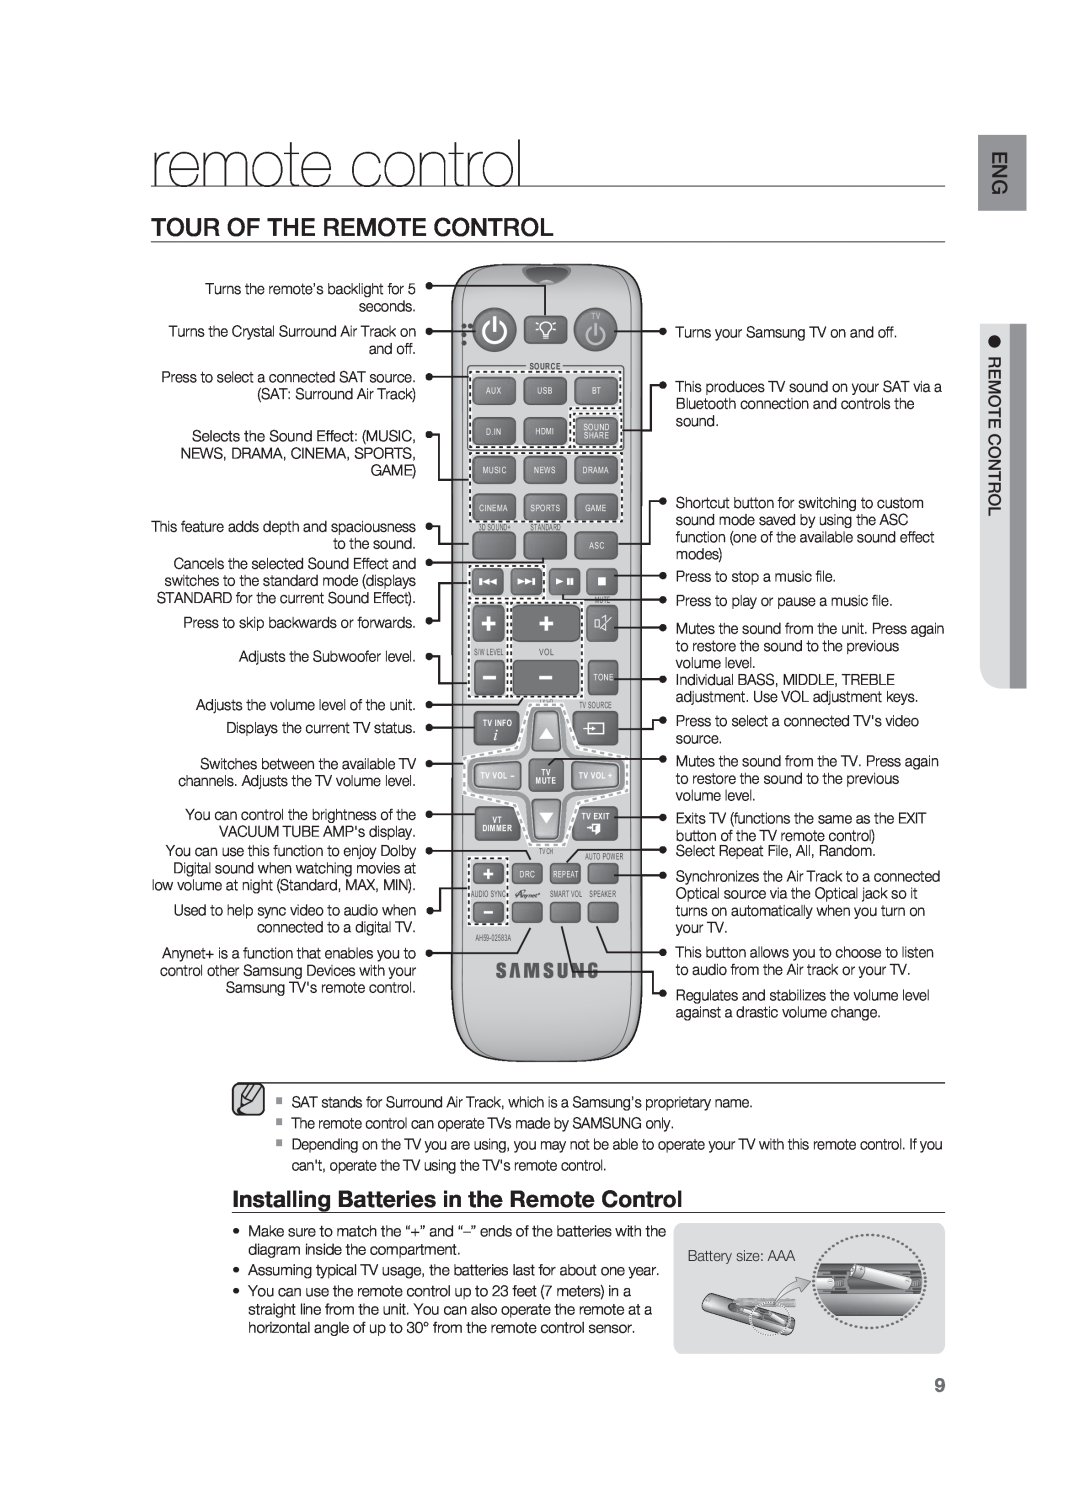 Samsung HW-F850/ZA user manual remote control, Tour Of The Remote Control, Installing Batteries in the Remote Control 